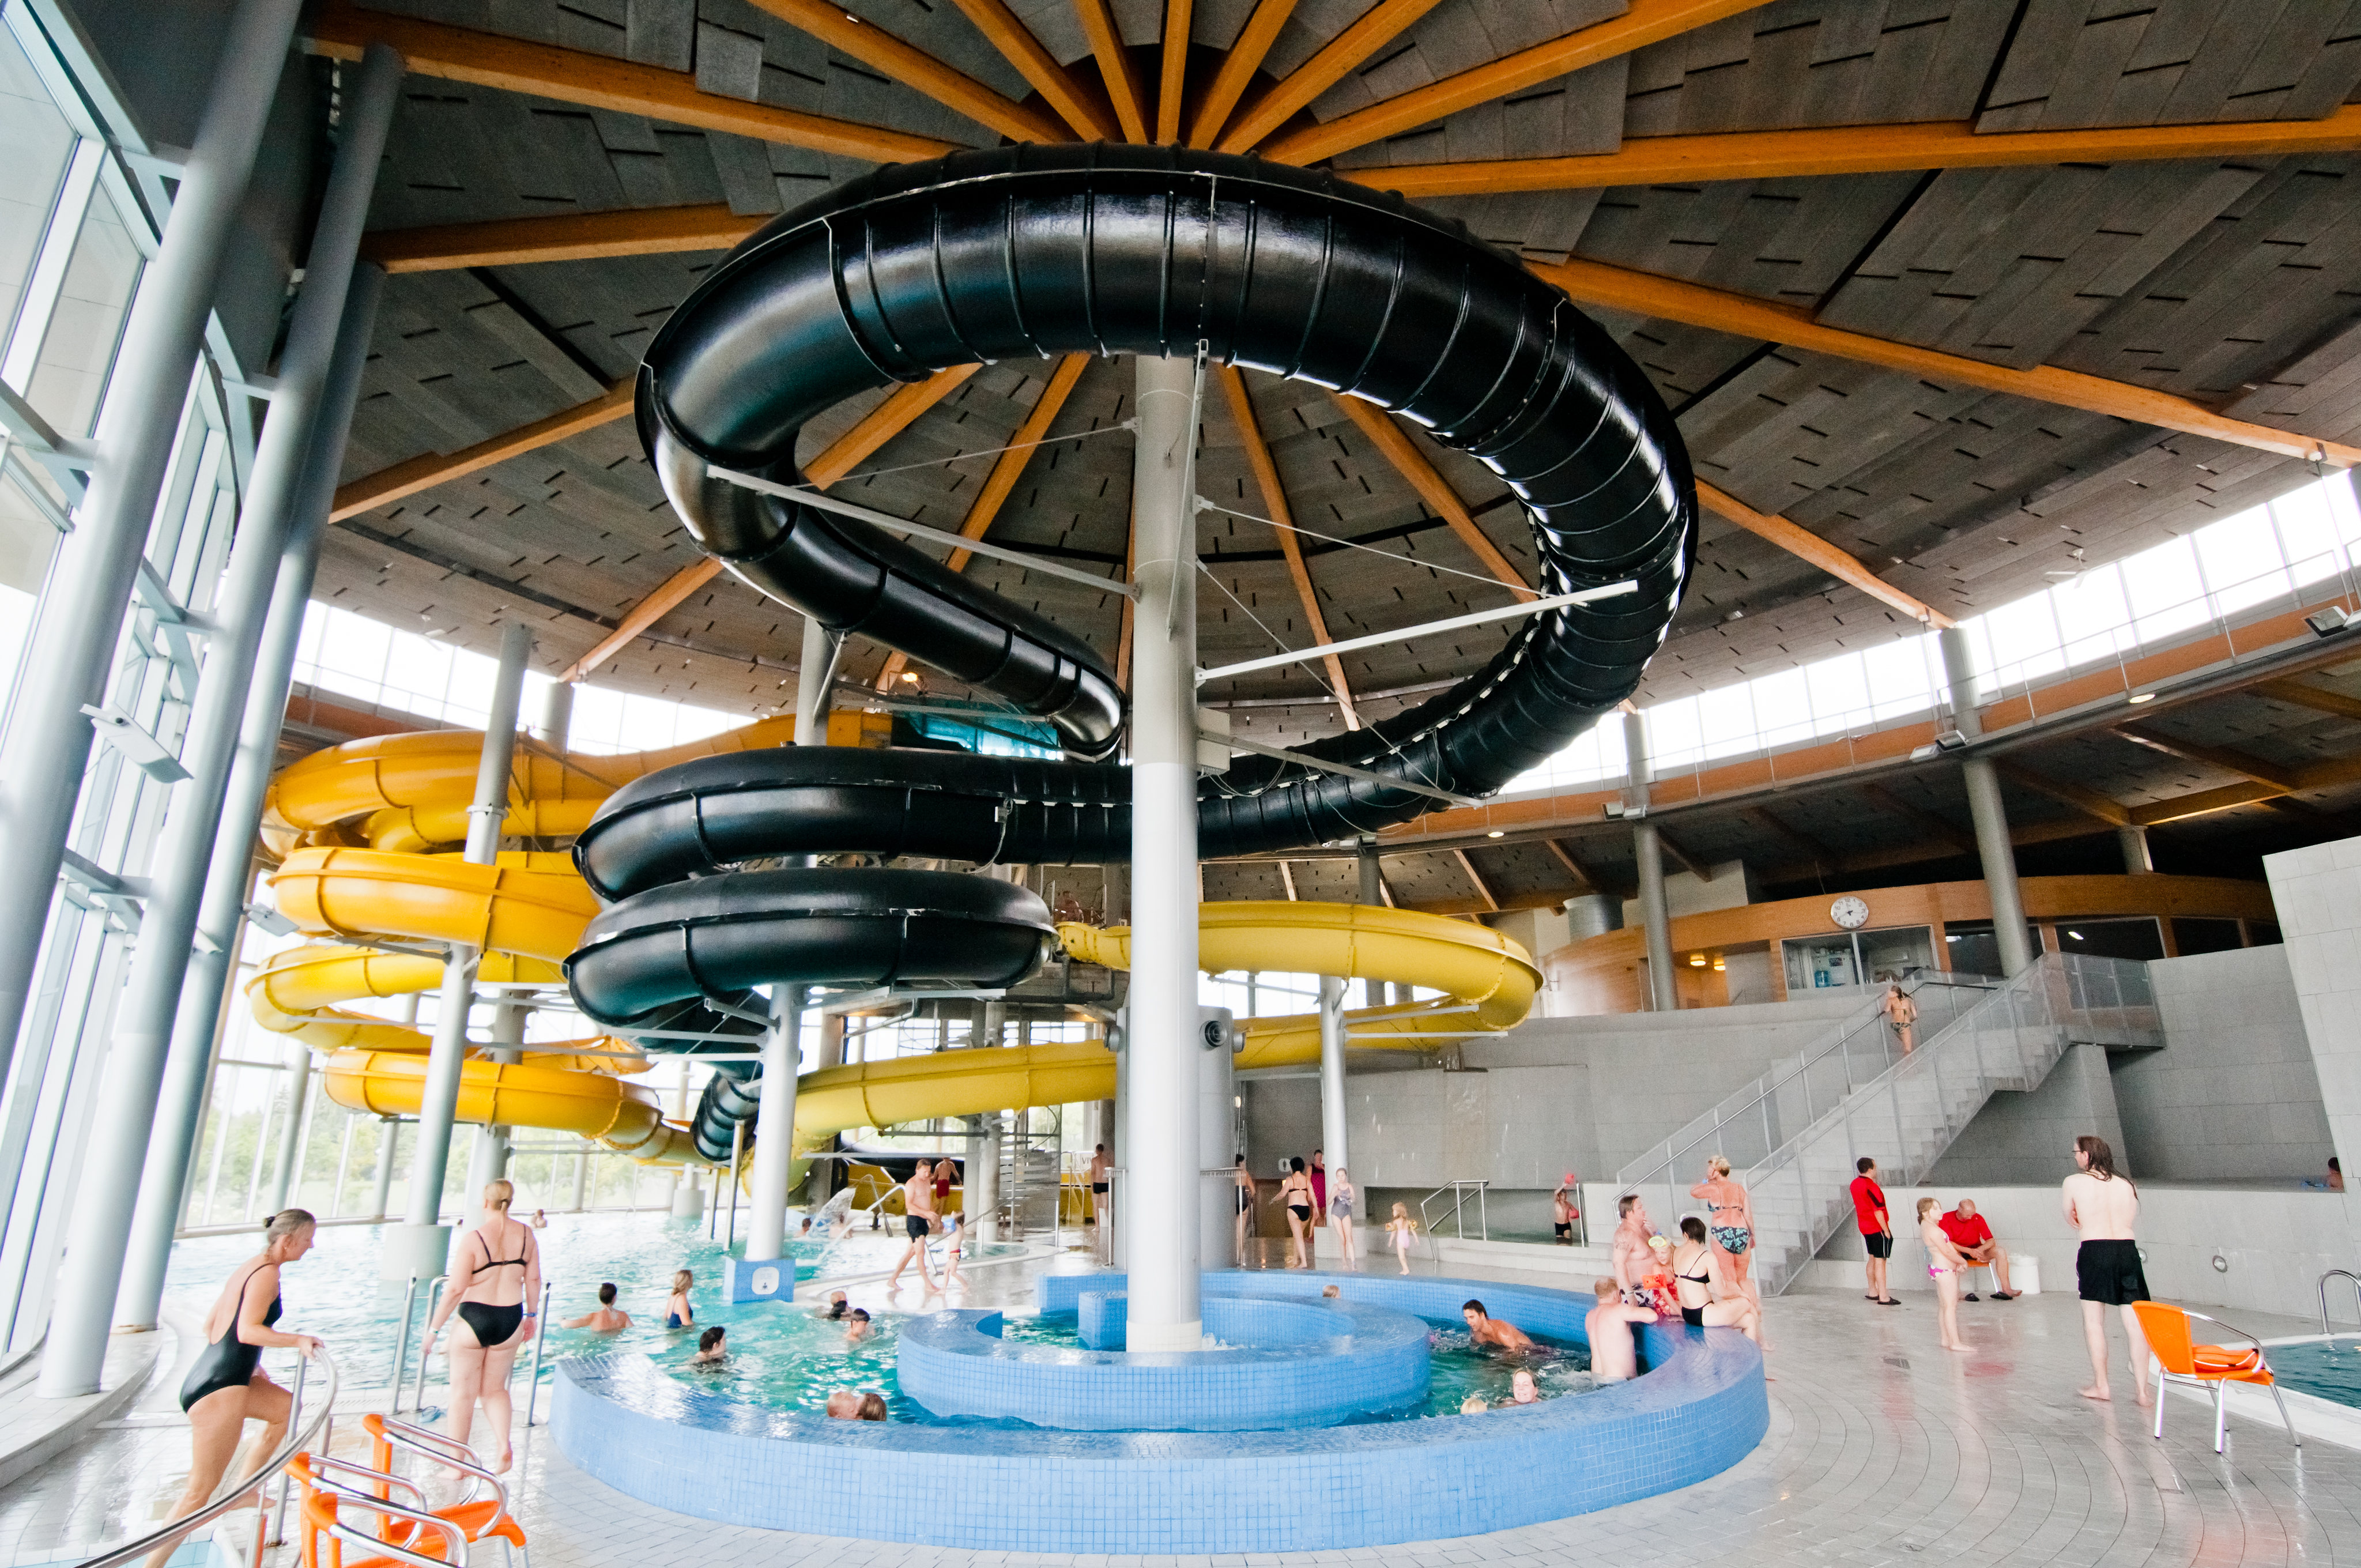 Slides at water park in Pärnu